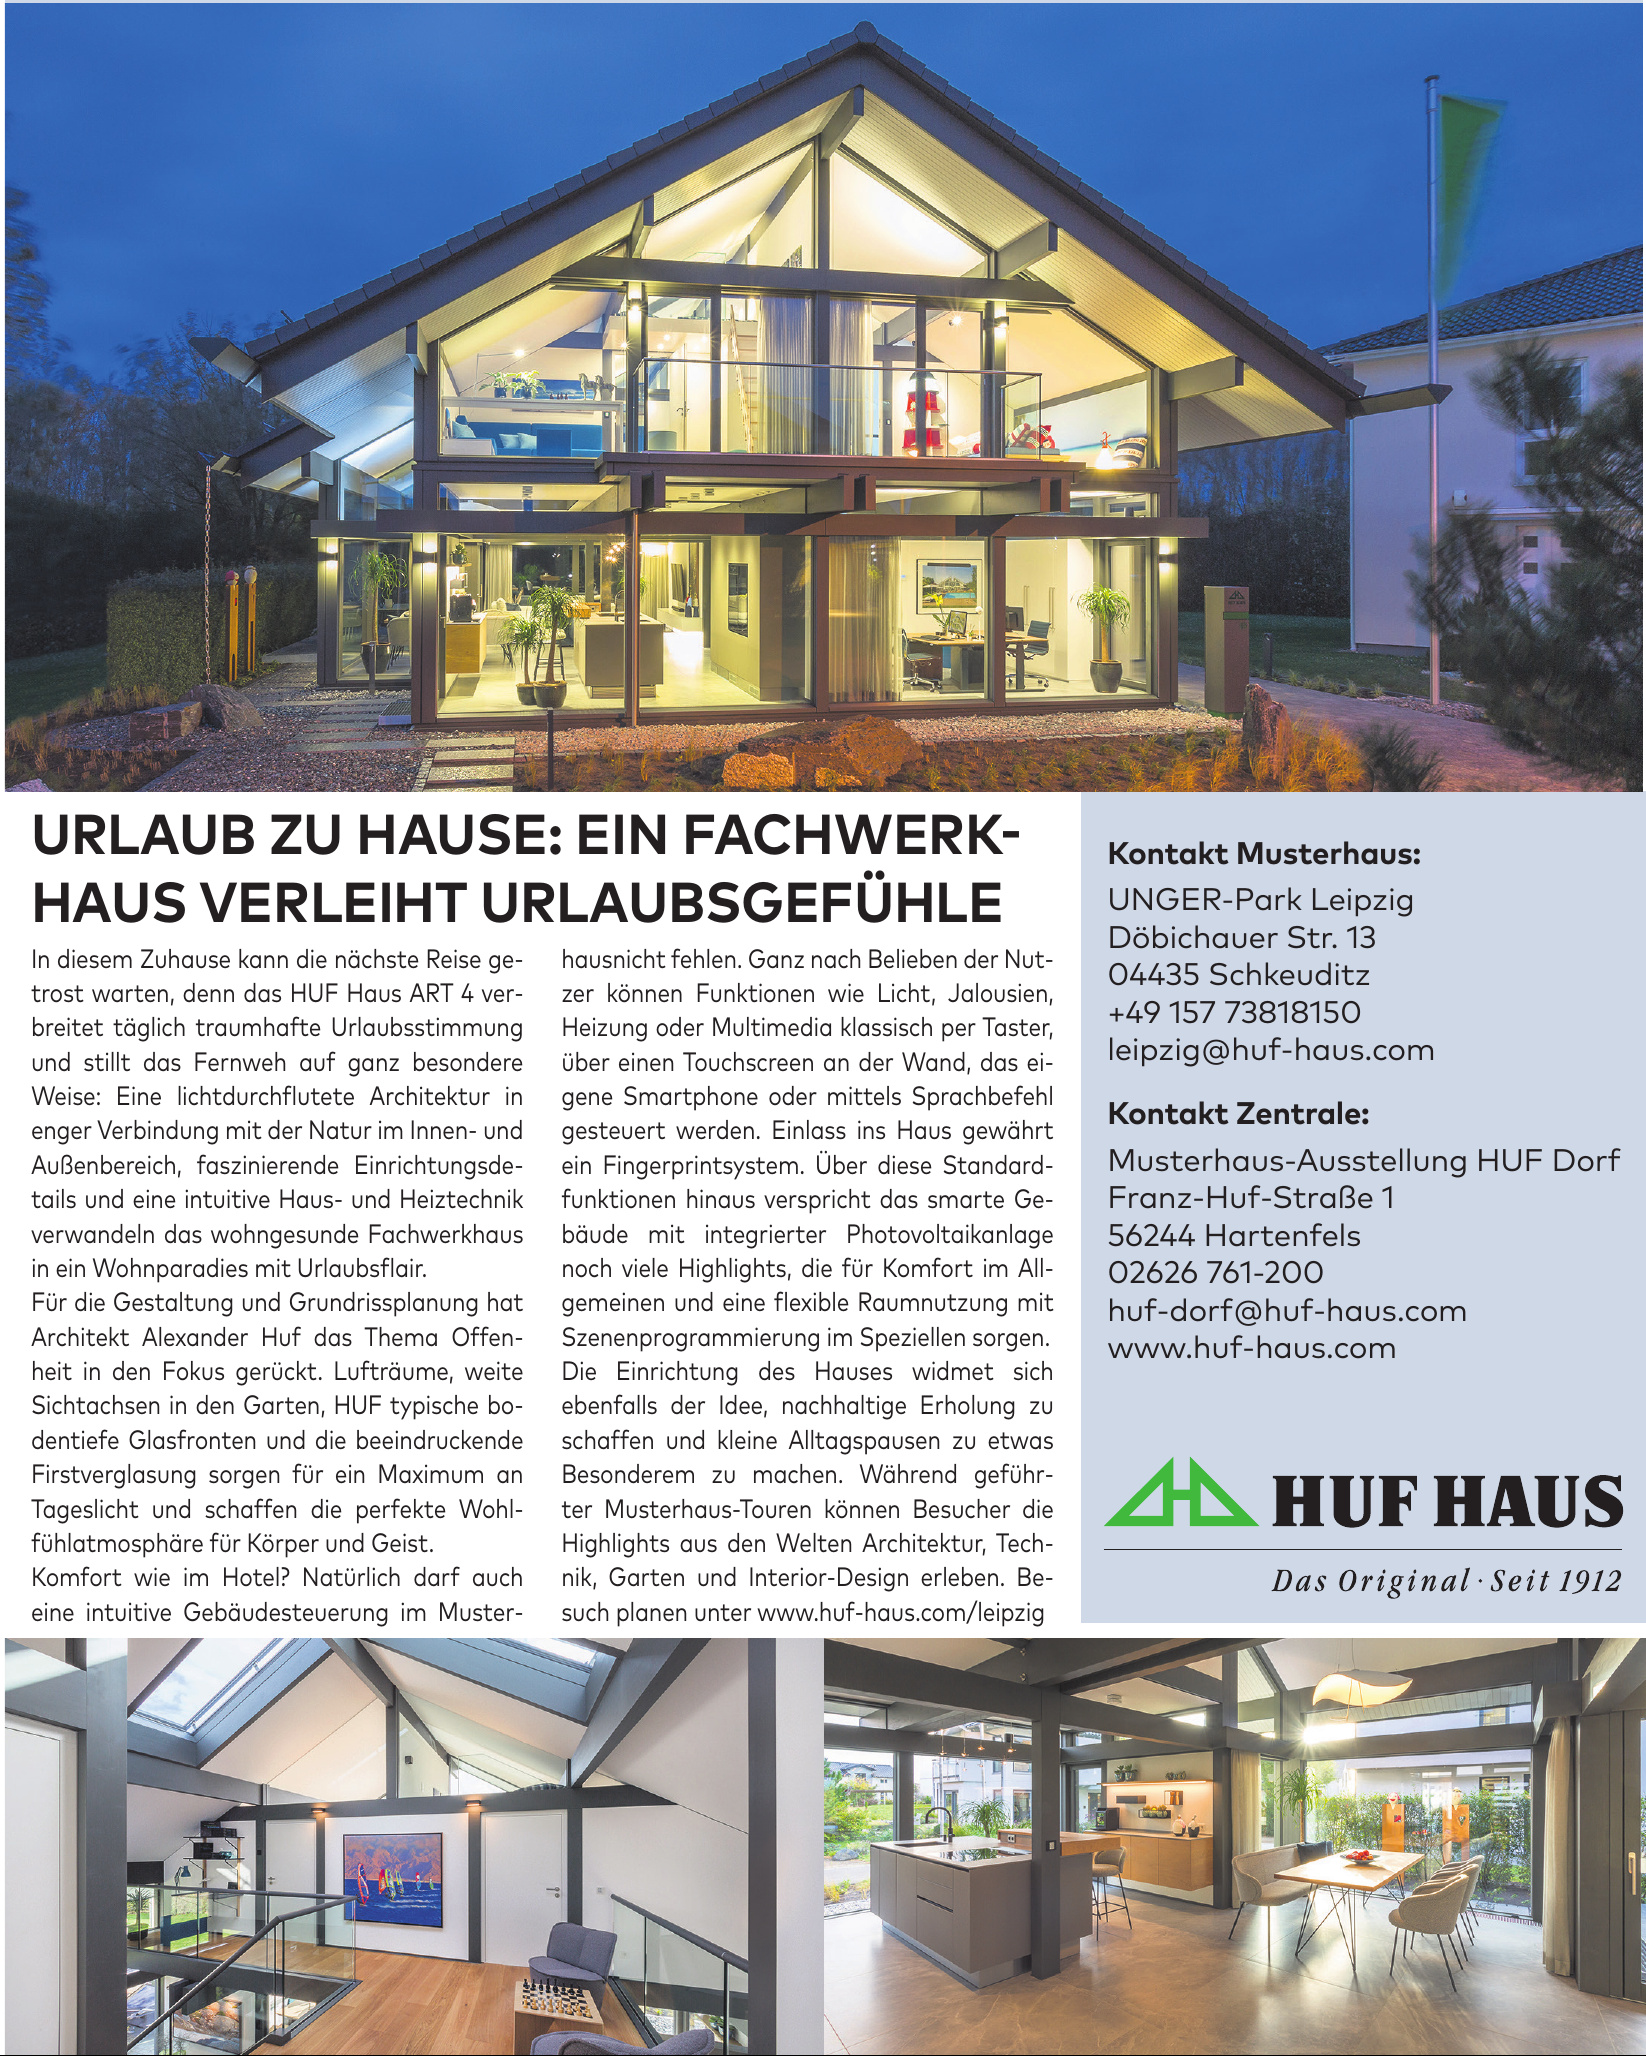 Musterhaus-Ausstellung HUF Dorf